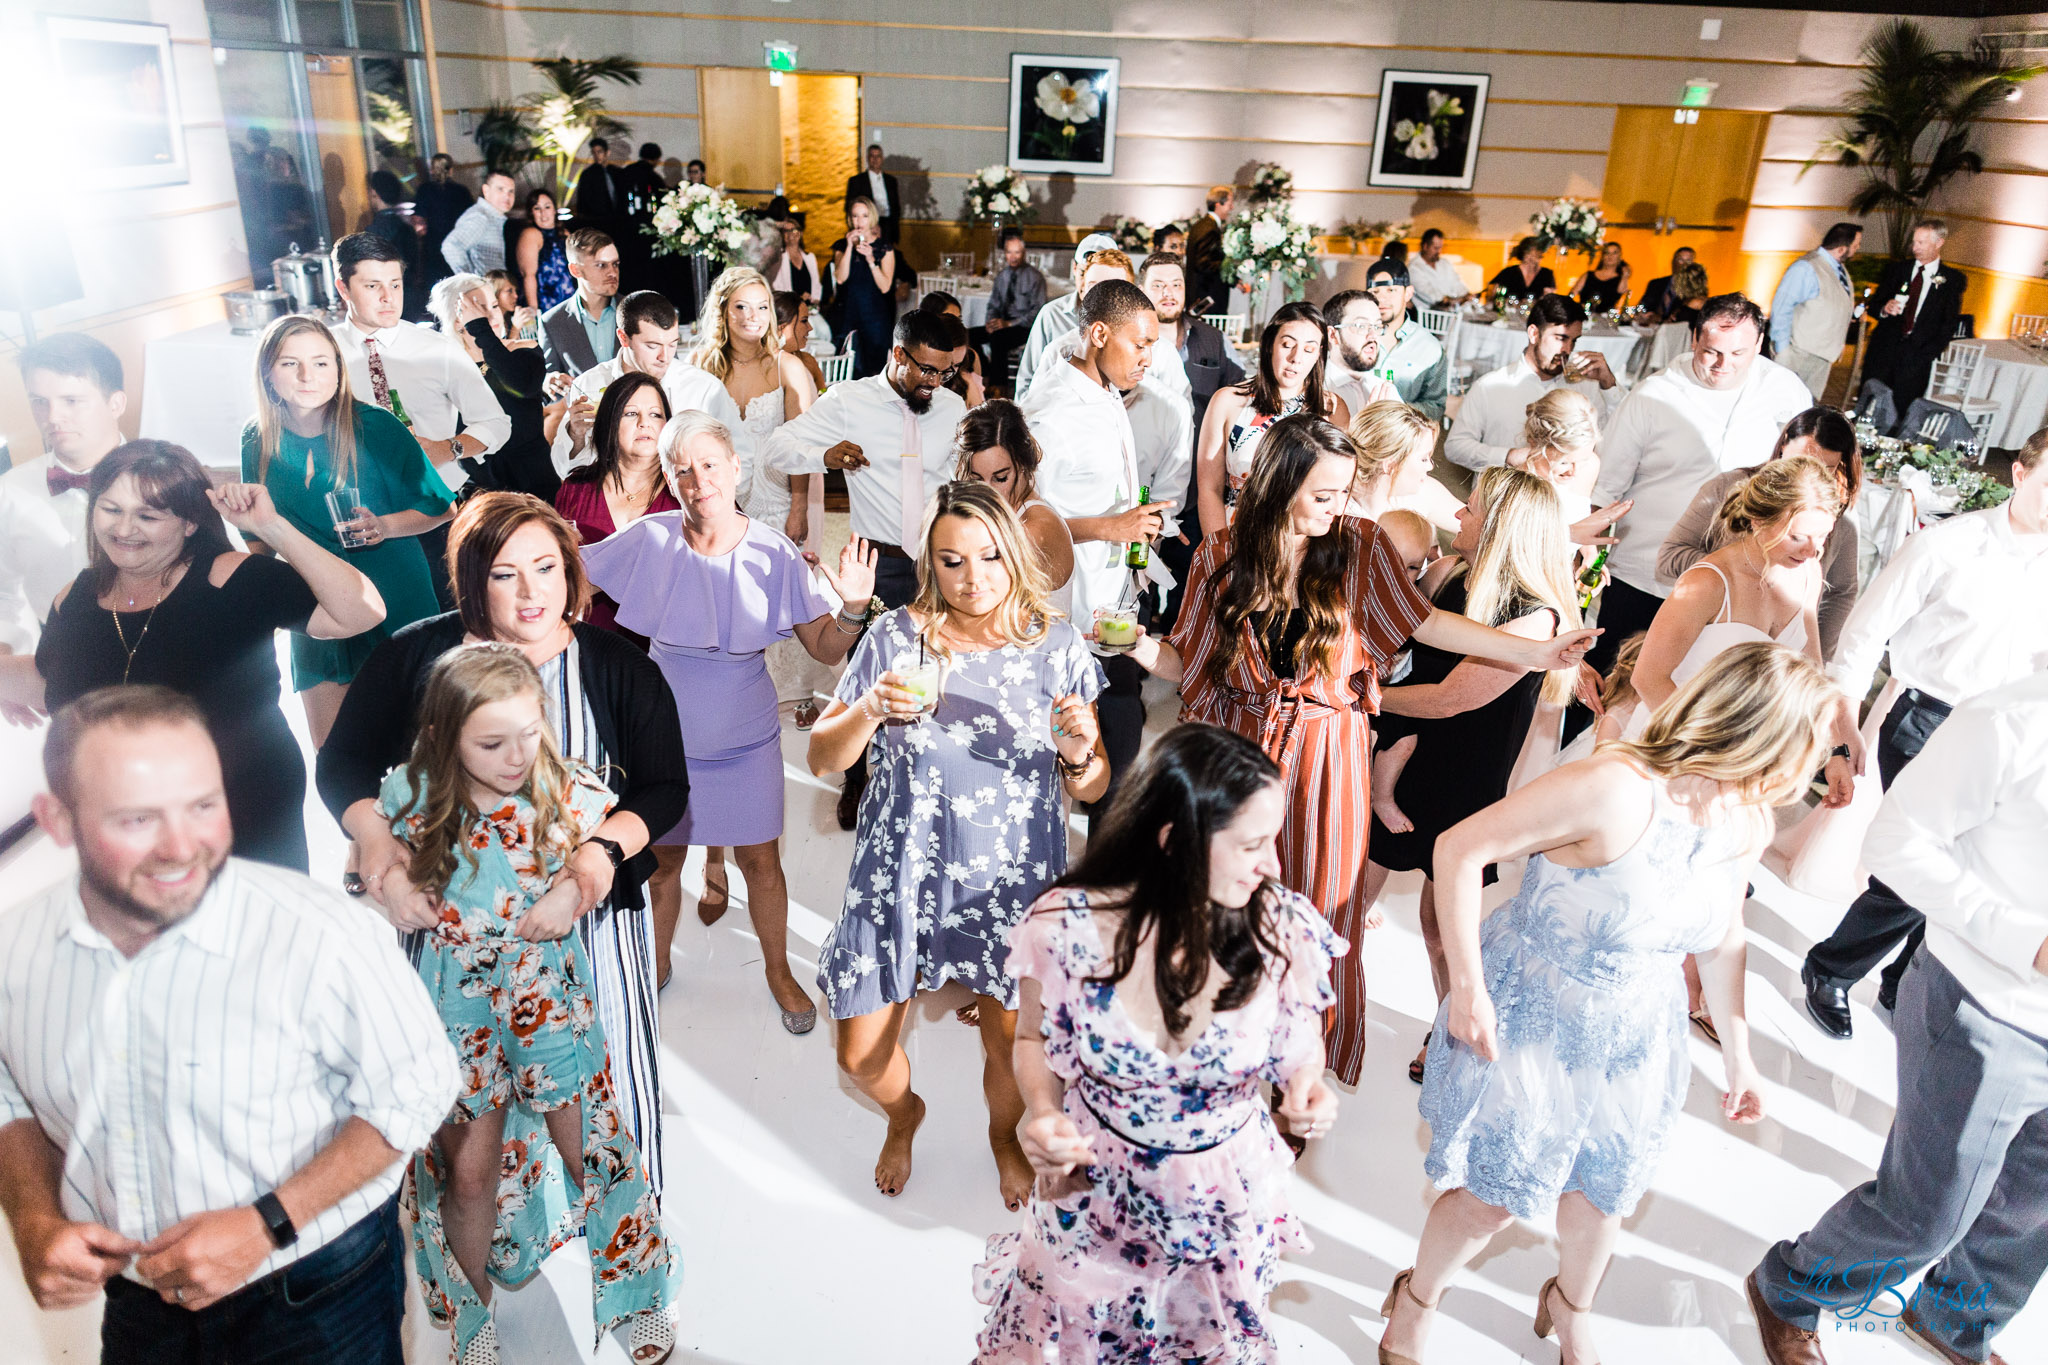 dancing dallas arboretum and botanical gardens wedding reception